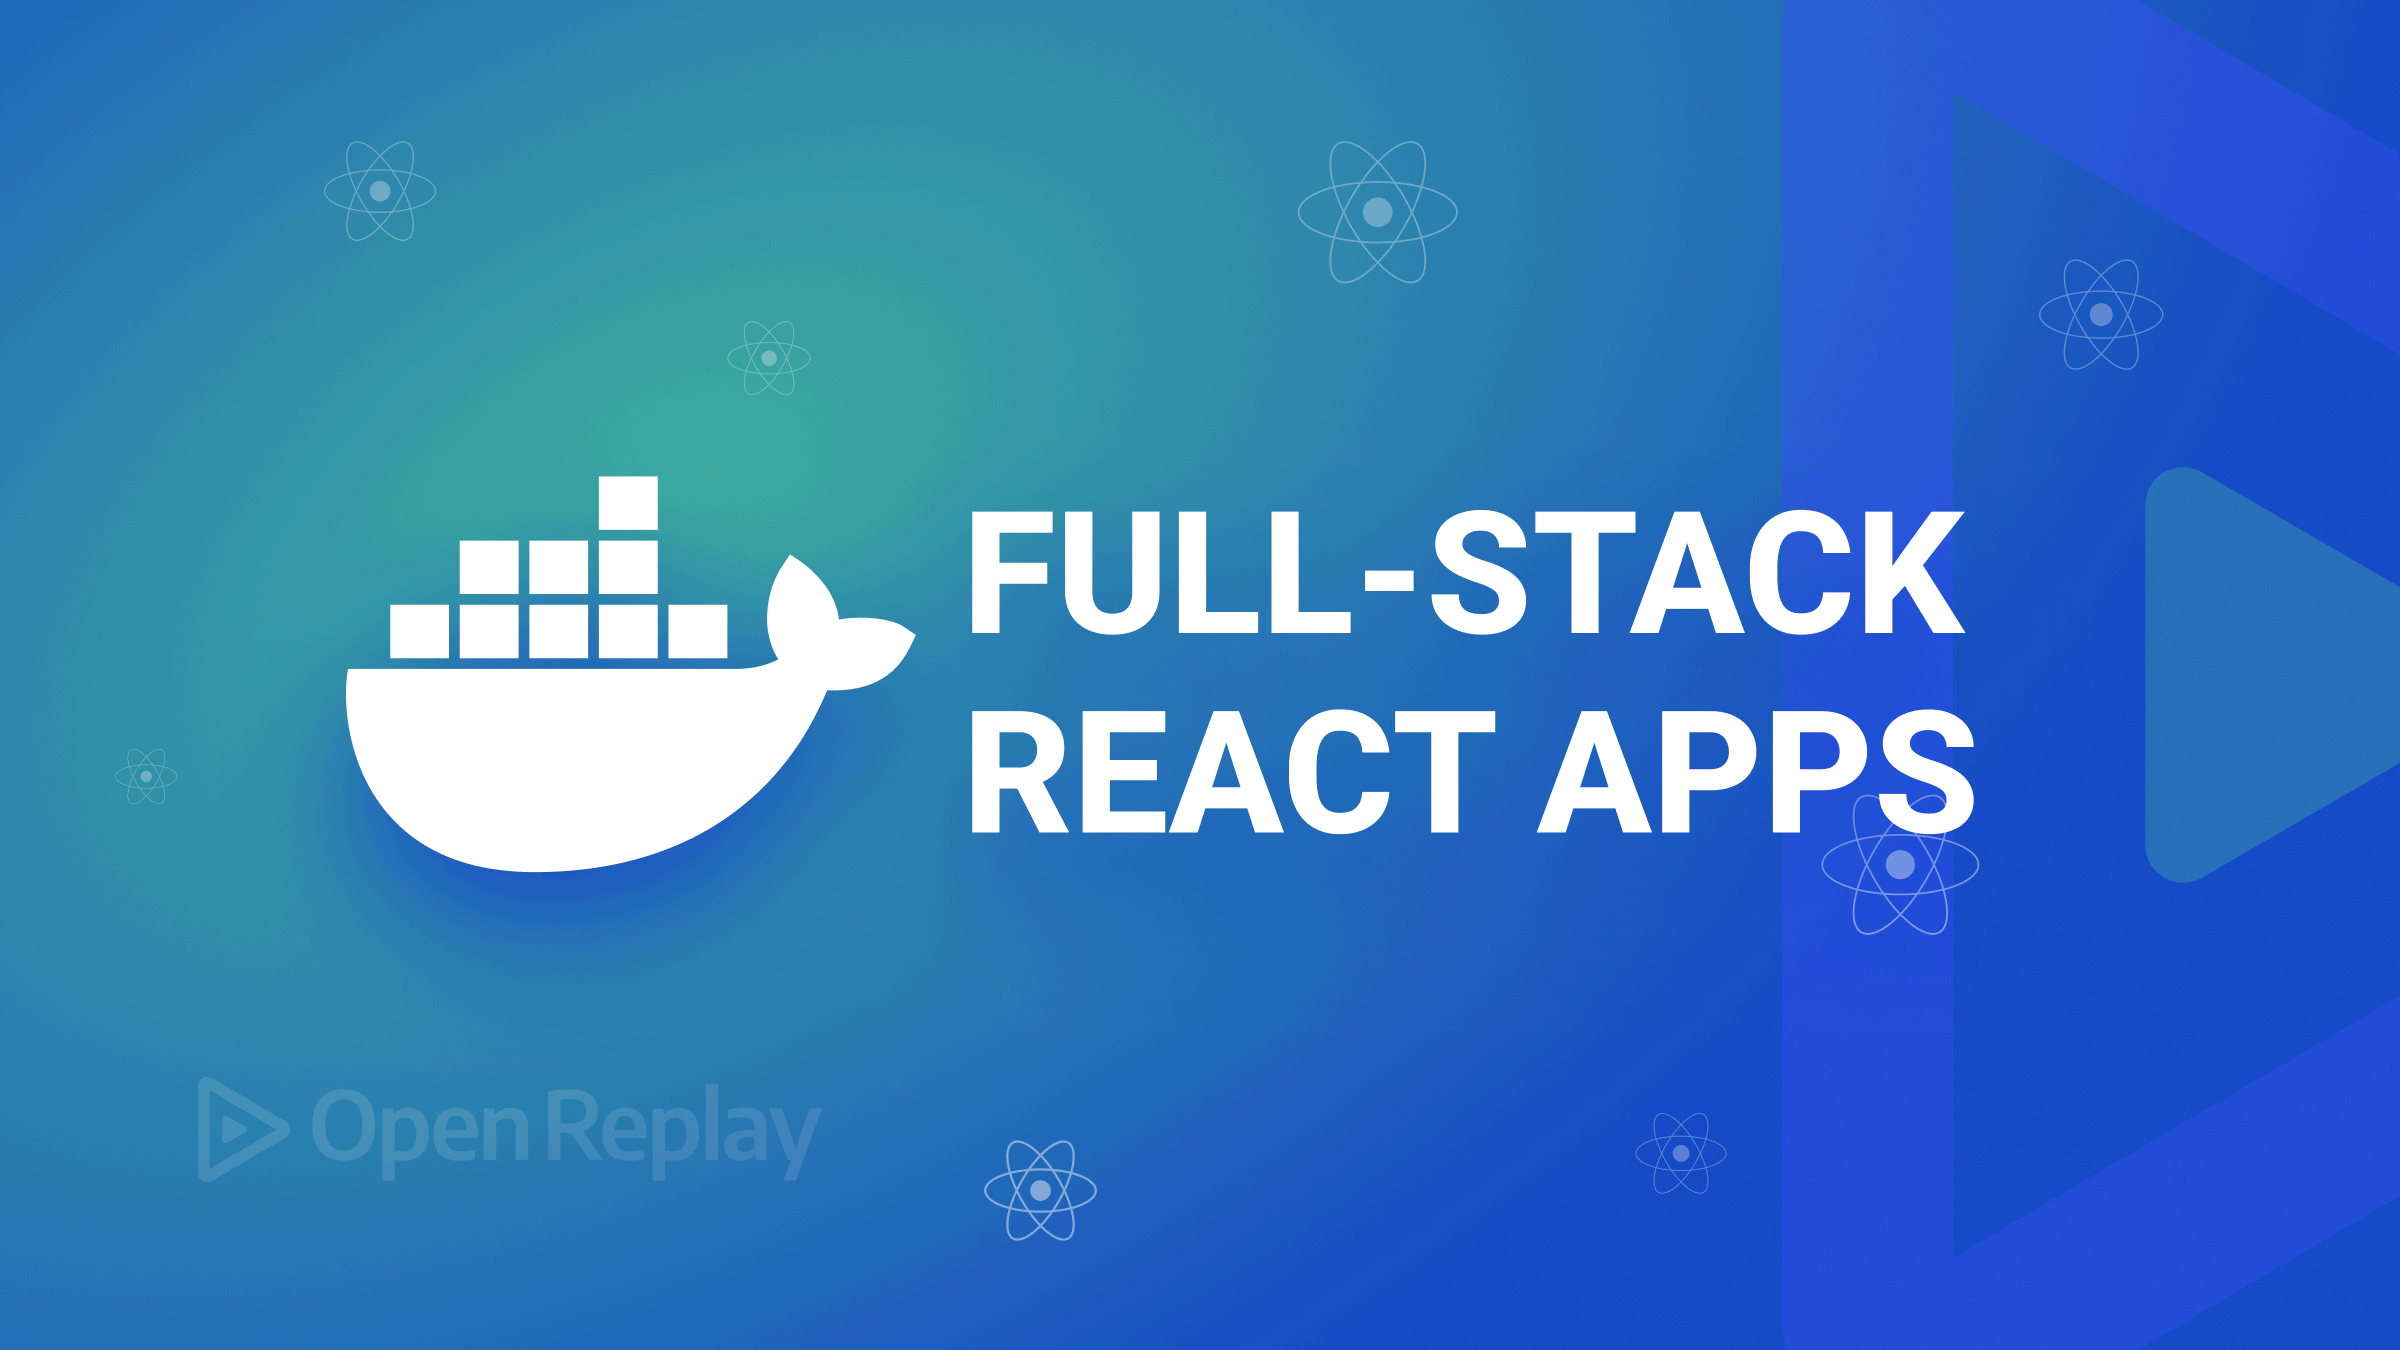 Dockerizing Full-Stack React apps